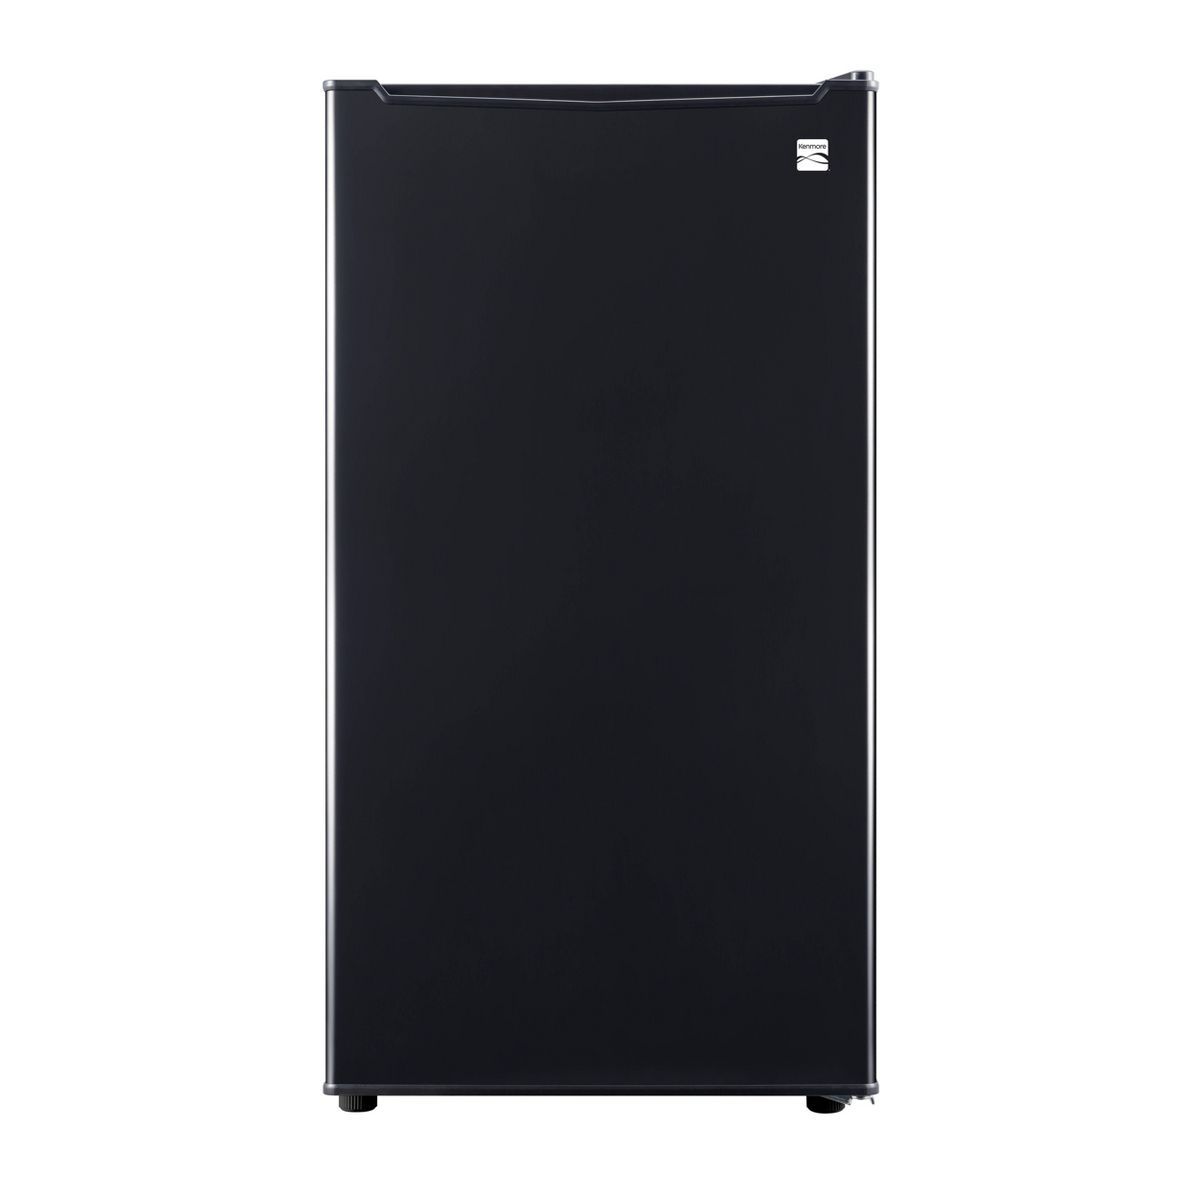 Kenmore 3.3 cu-ft Refrigerator - Black | Target